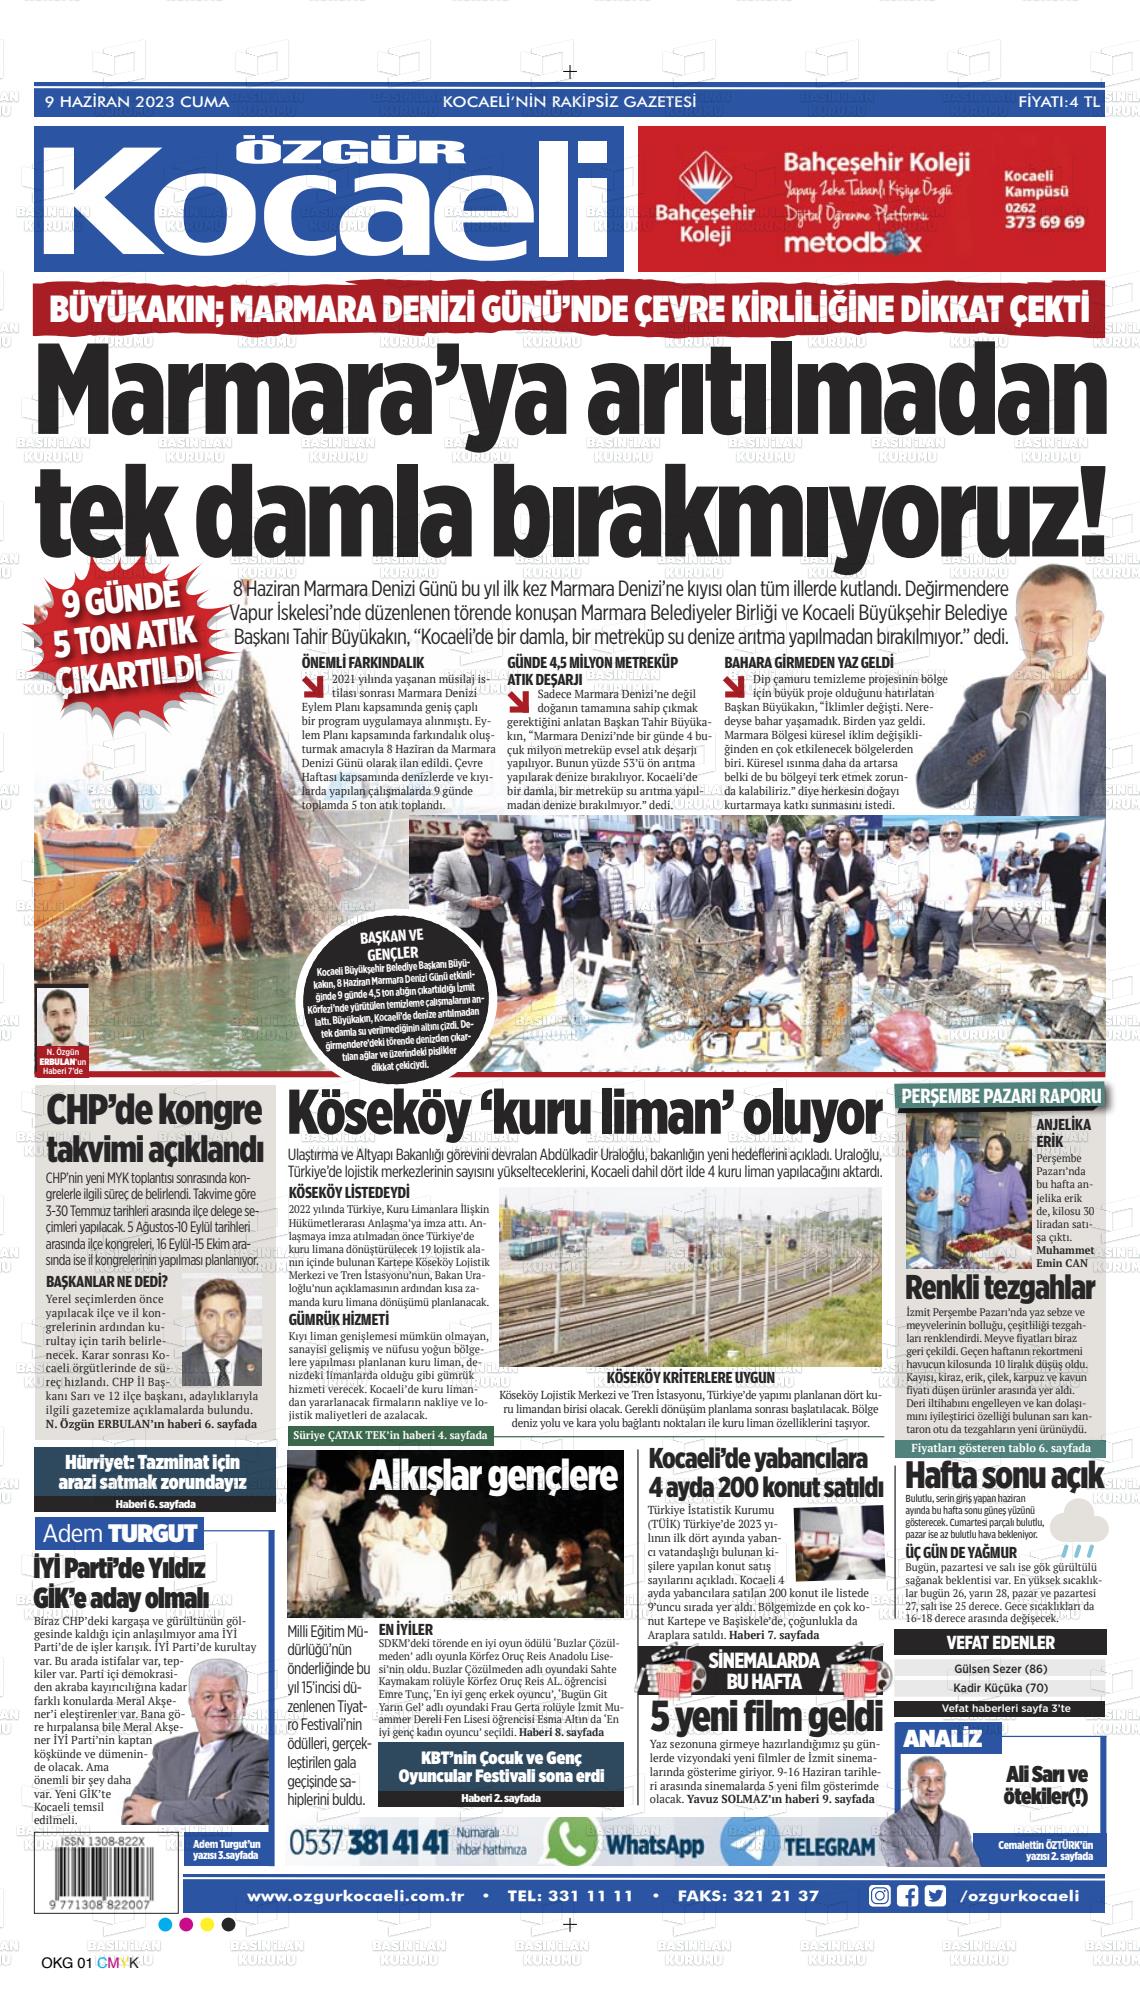 09 Haziran 2023 Özgür Kocaeli Gazete Manşeti